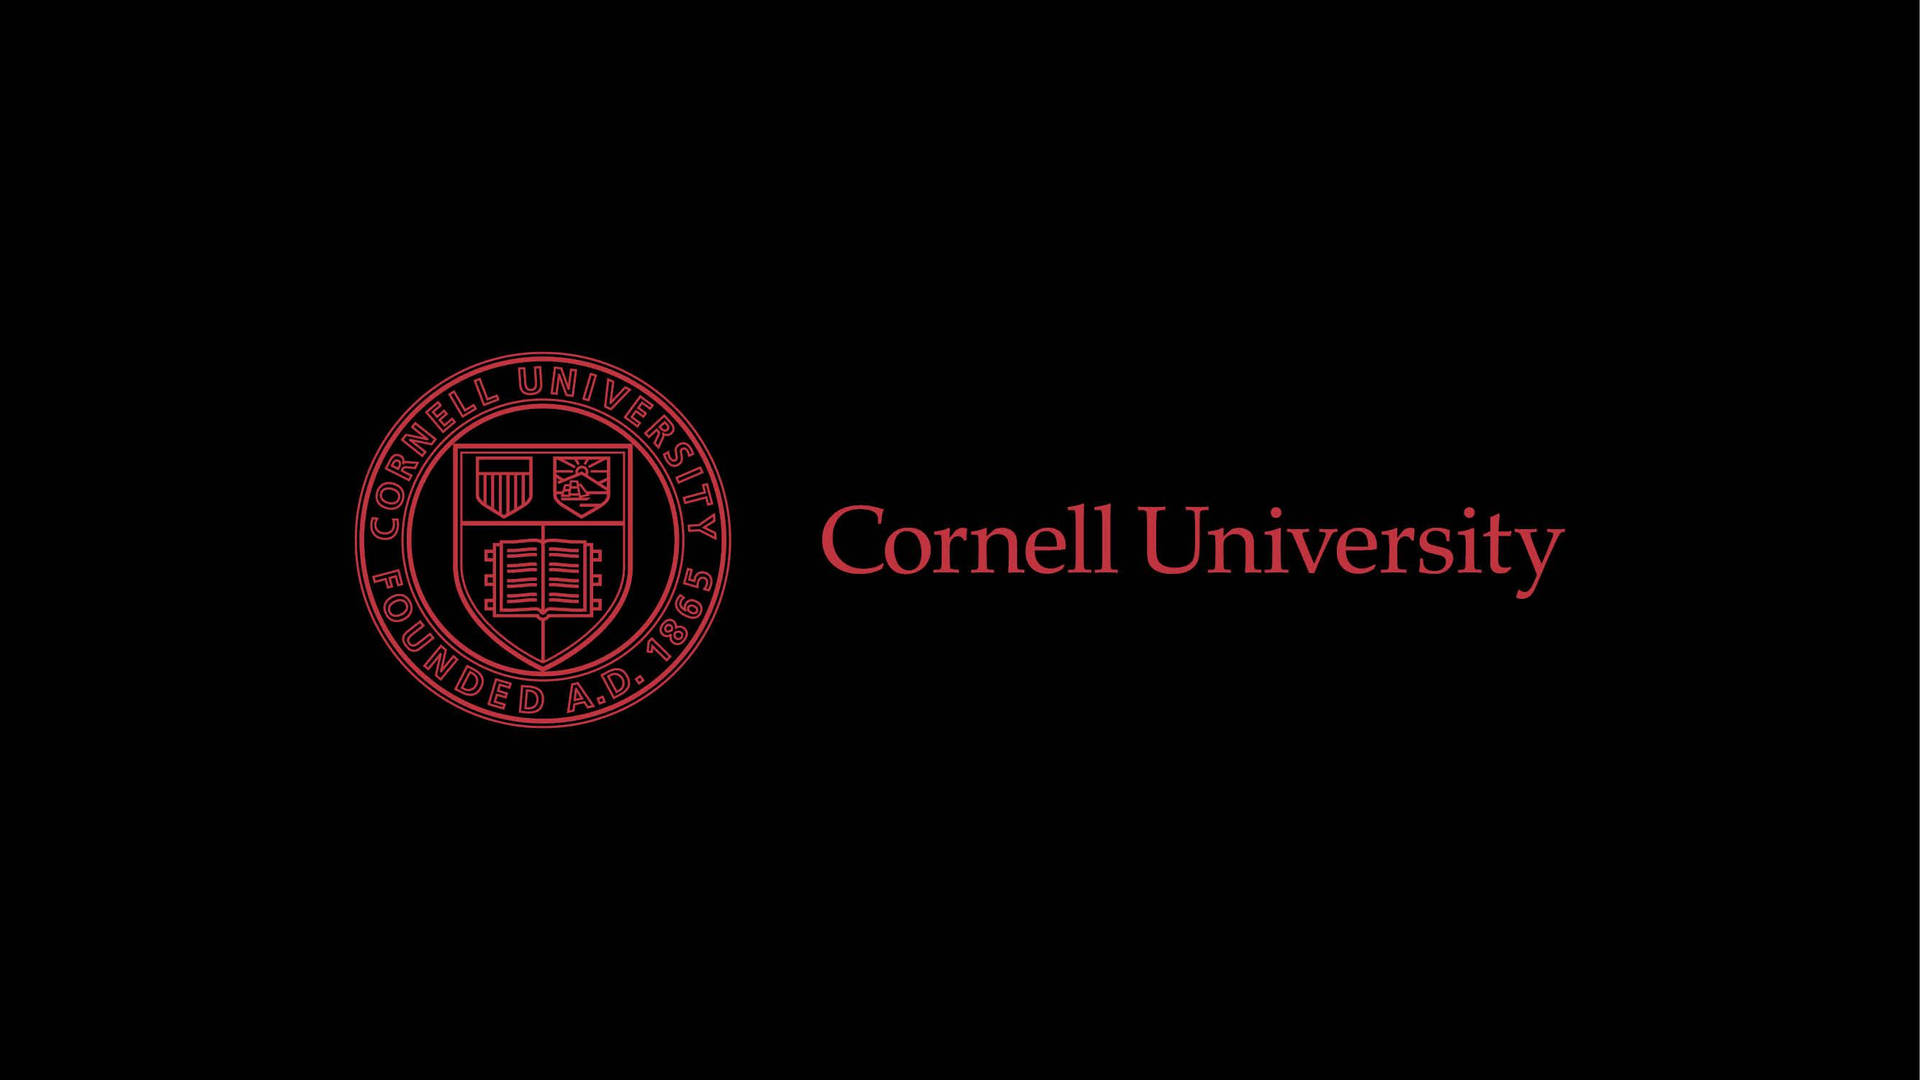 Cornell Universitet 2667 X 1500 Wallpaper